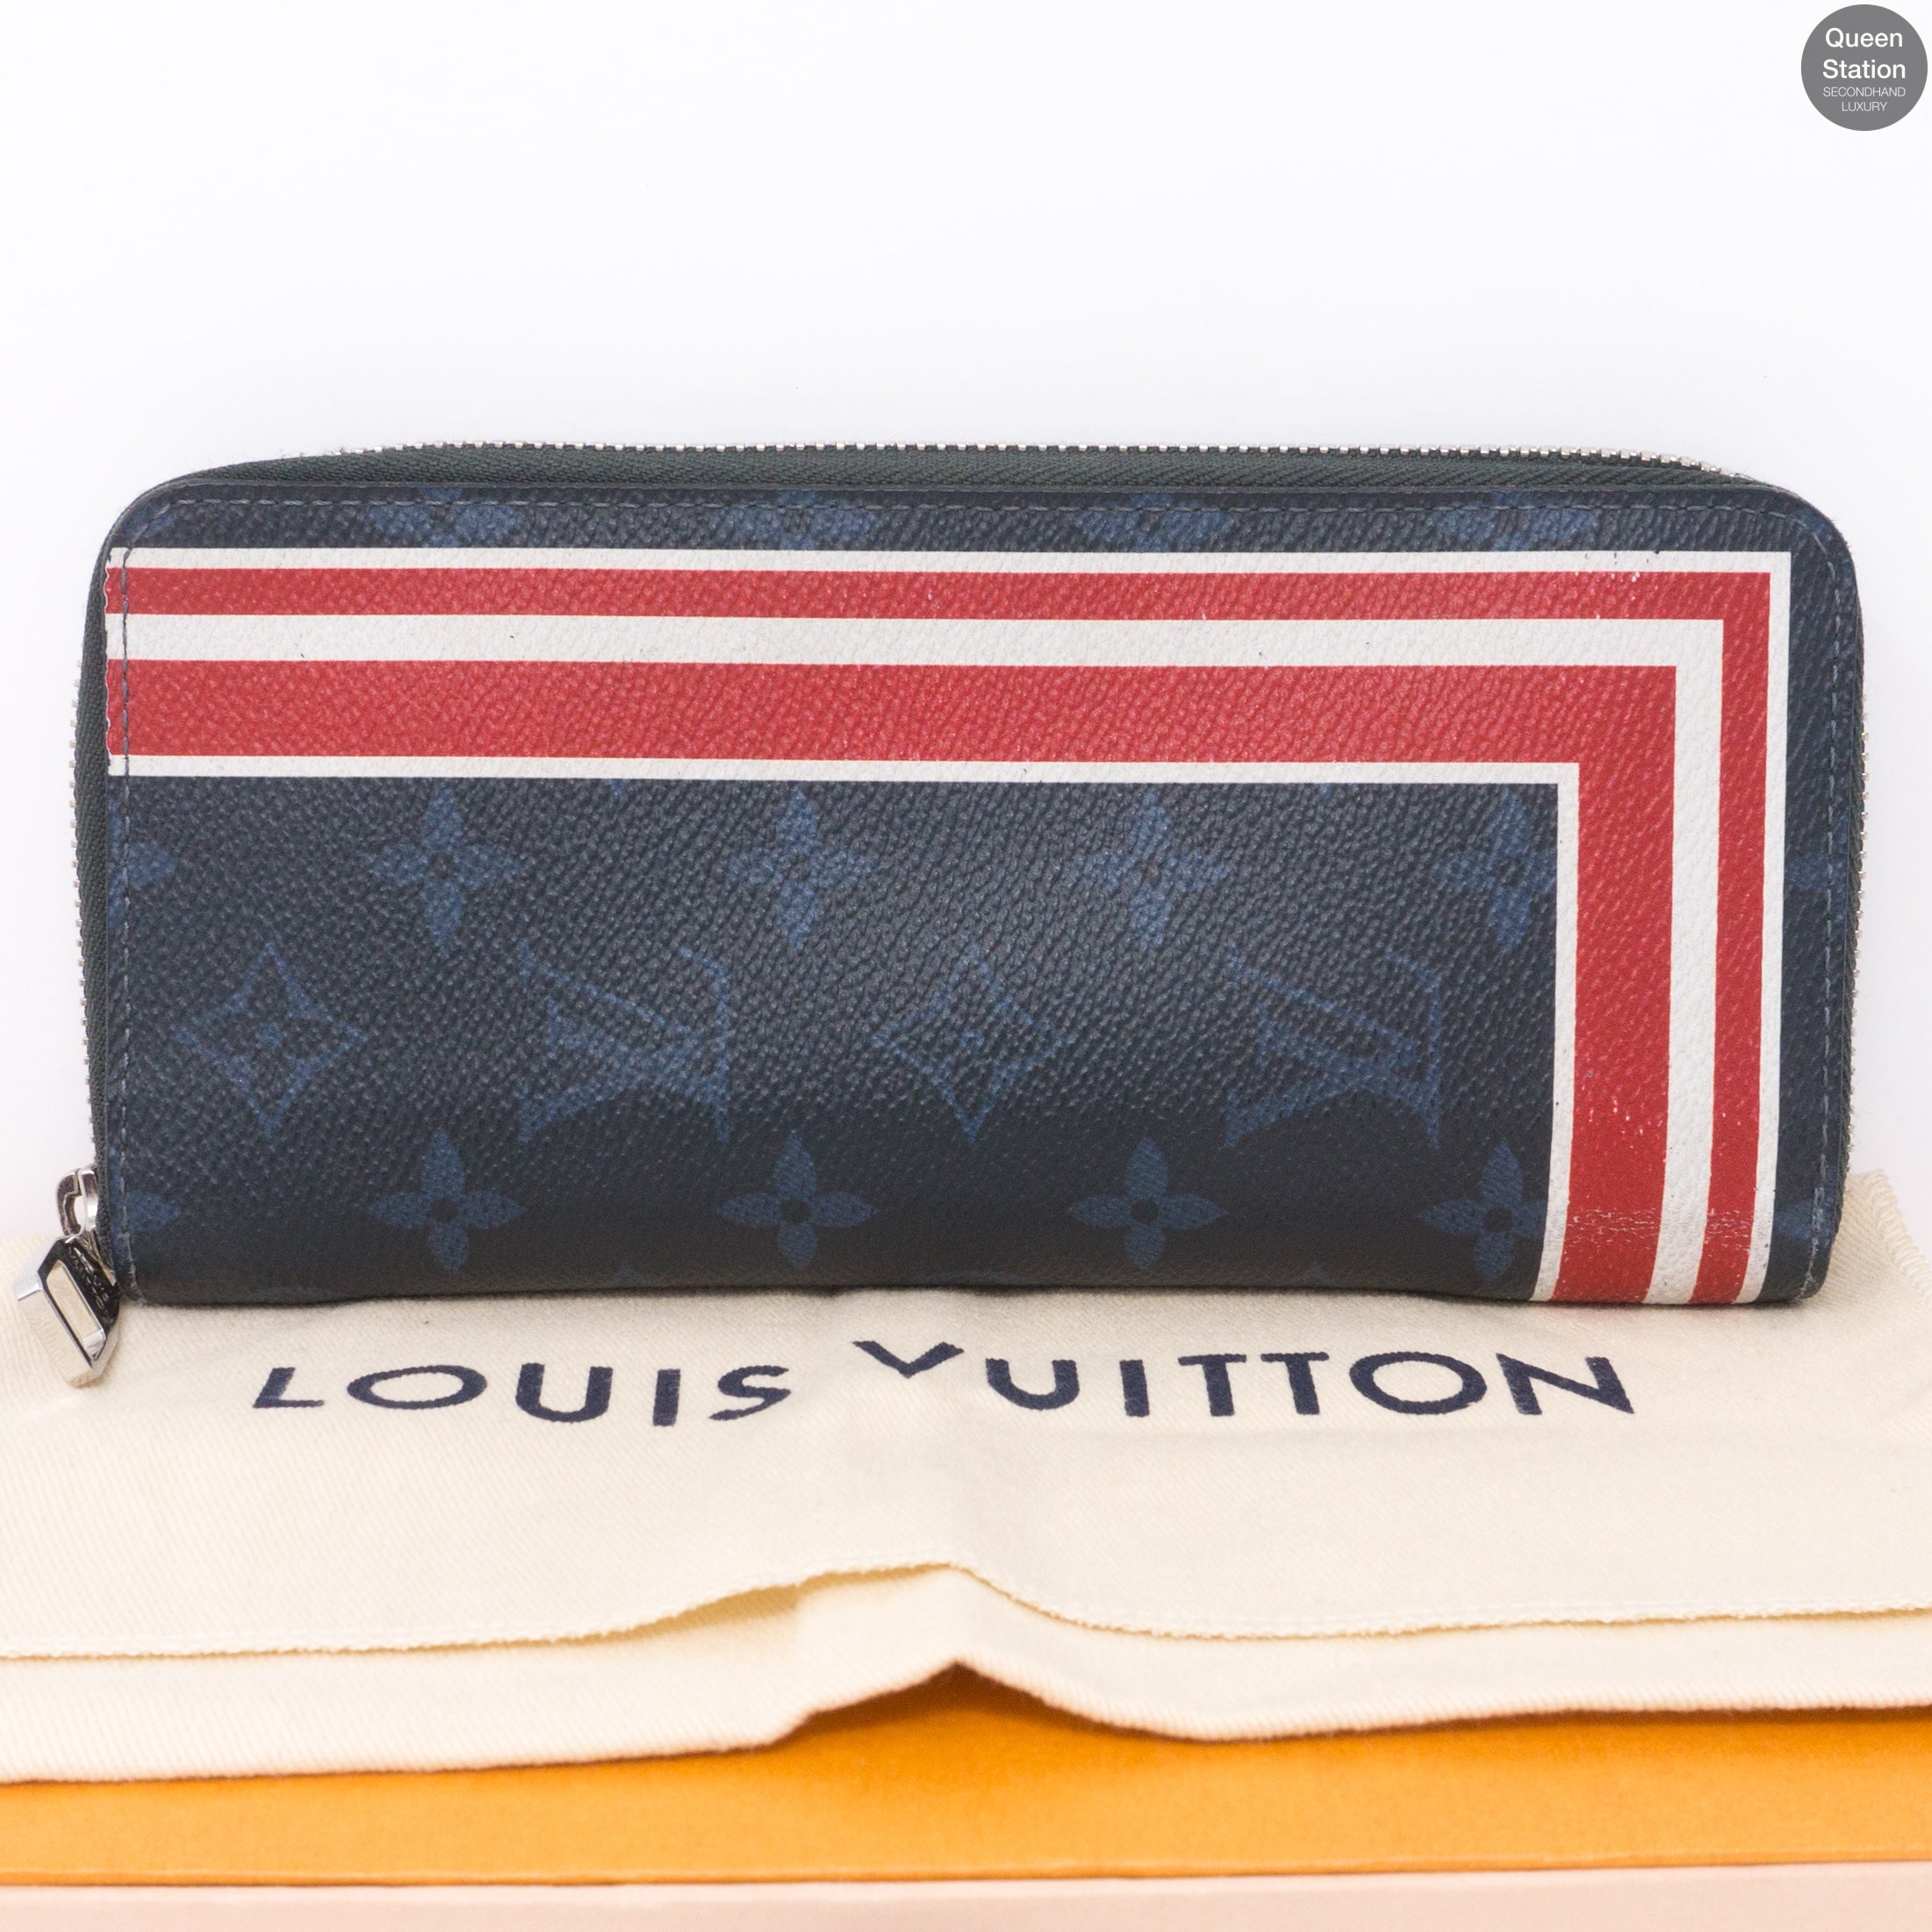 We Review The Louis Vuitton Zippy Coin Purse Vertical! 